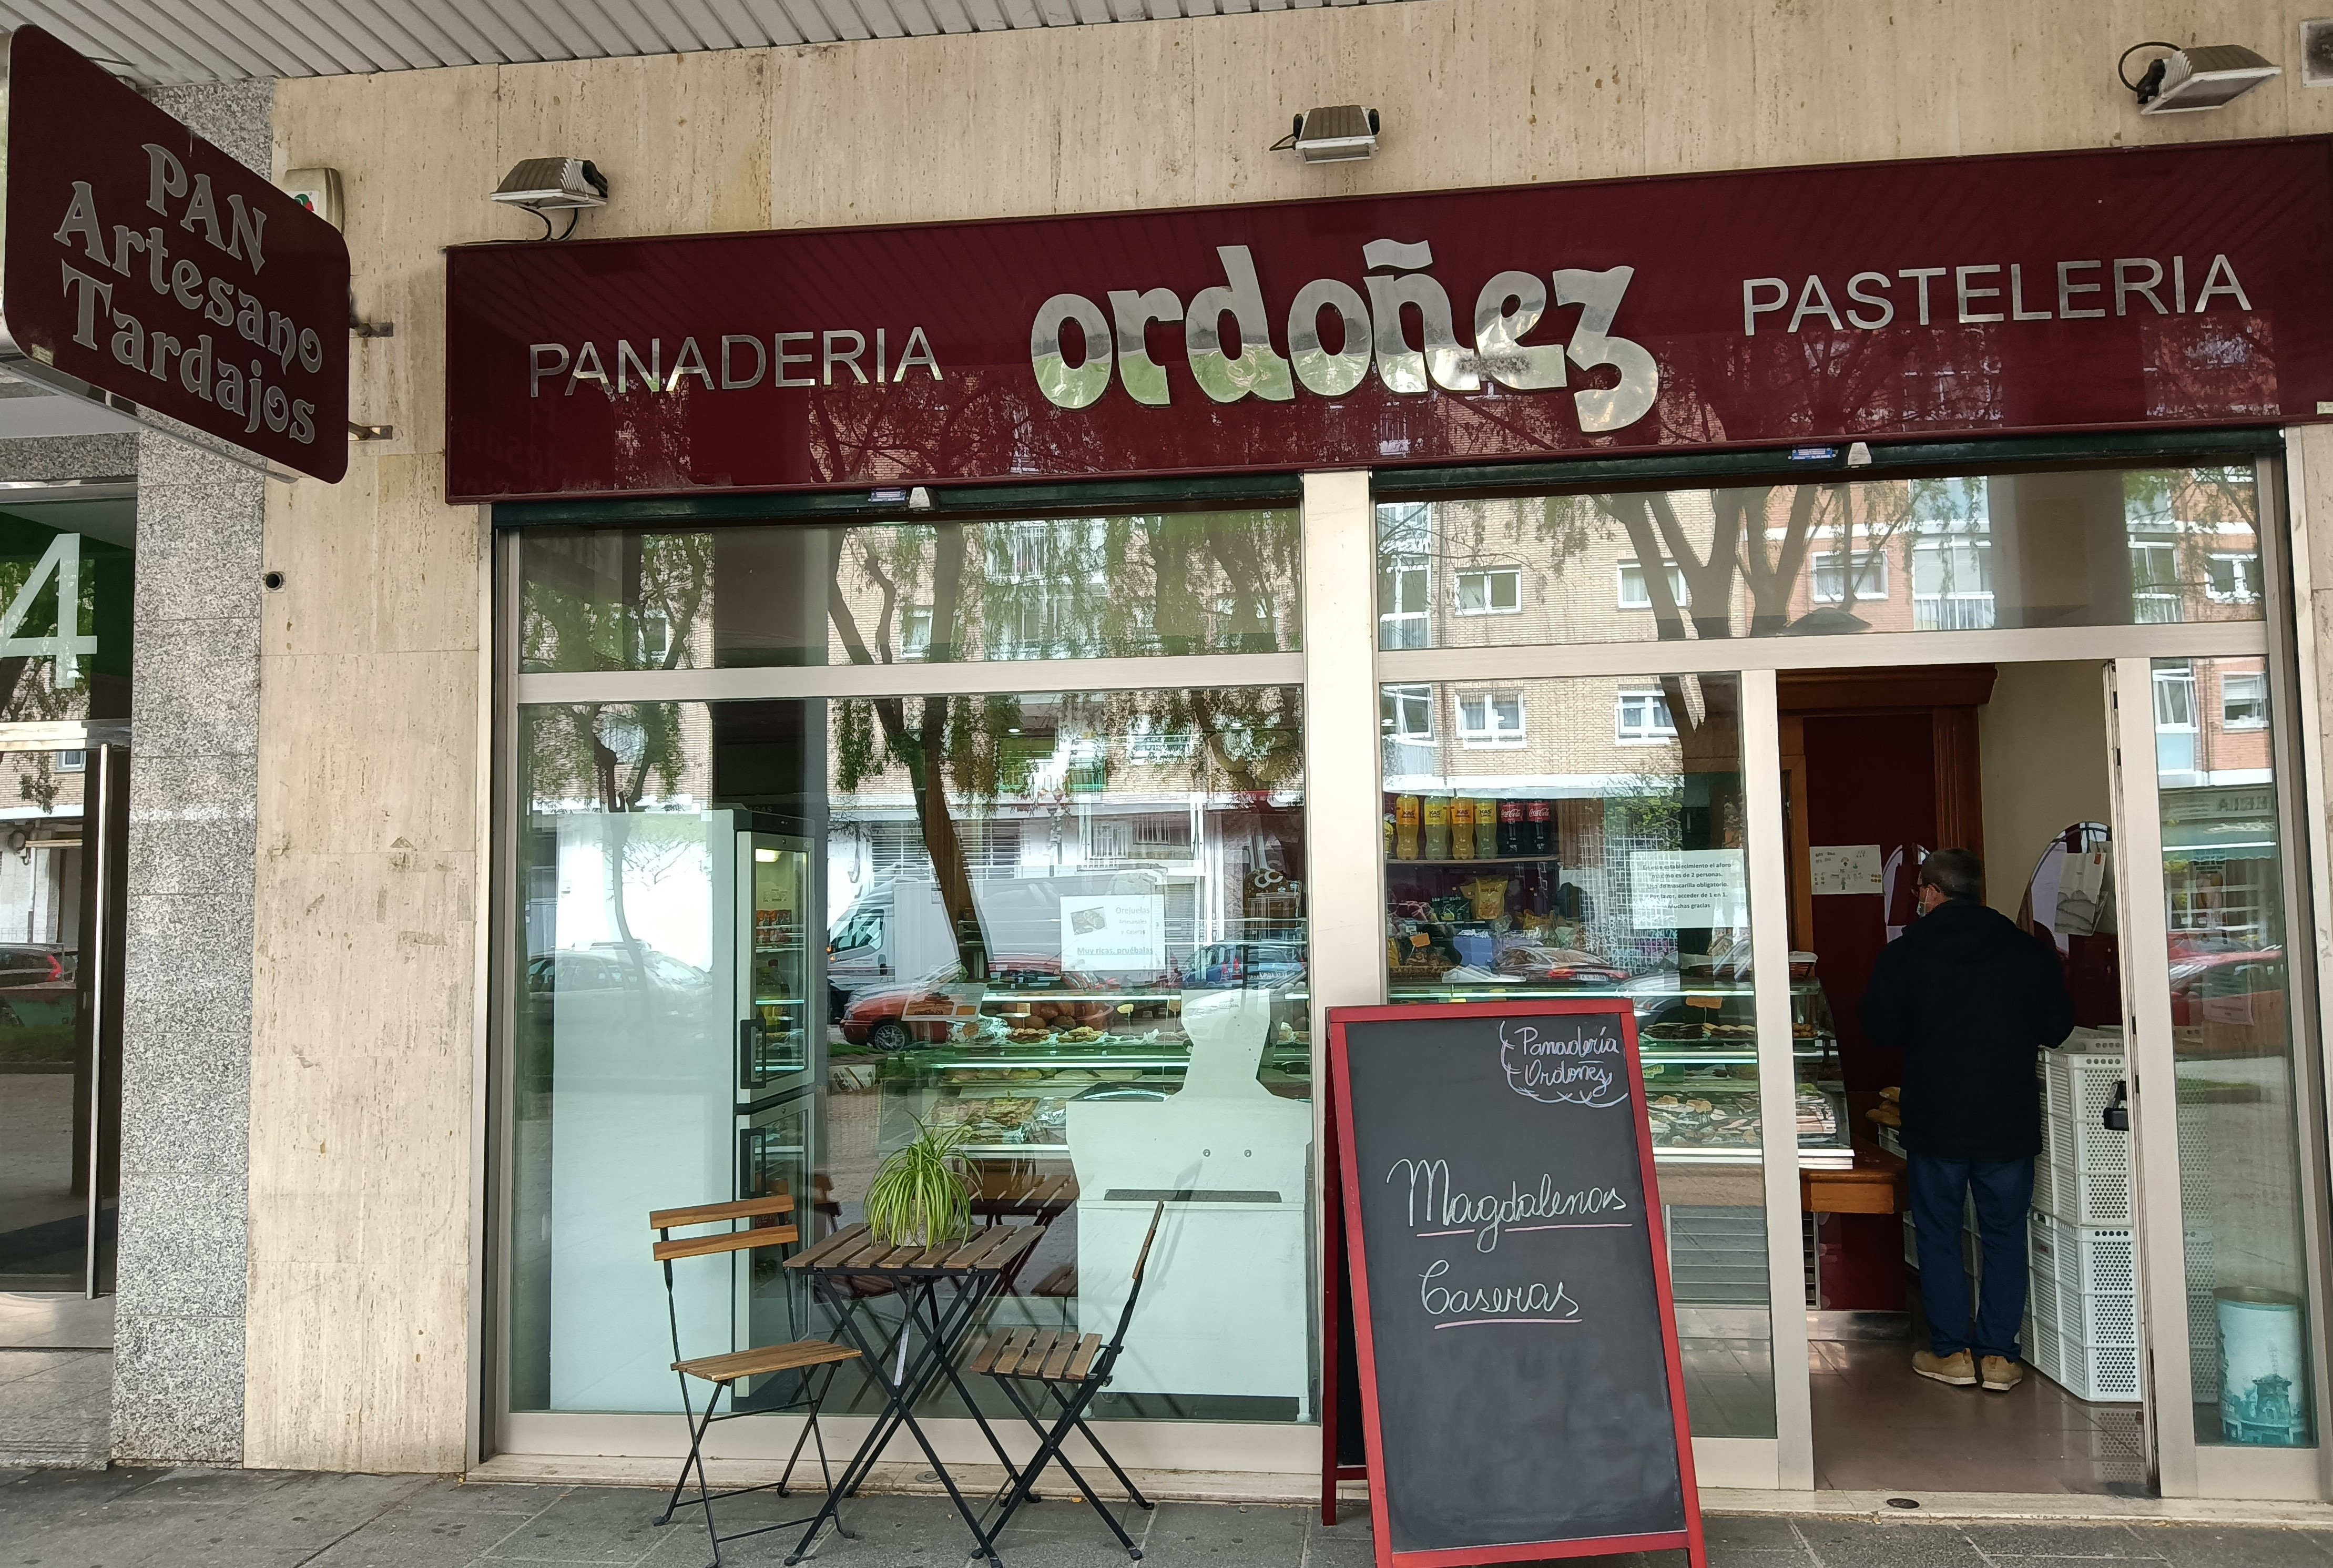 Panaderia Pasteleria Ordoñez